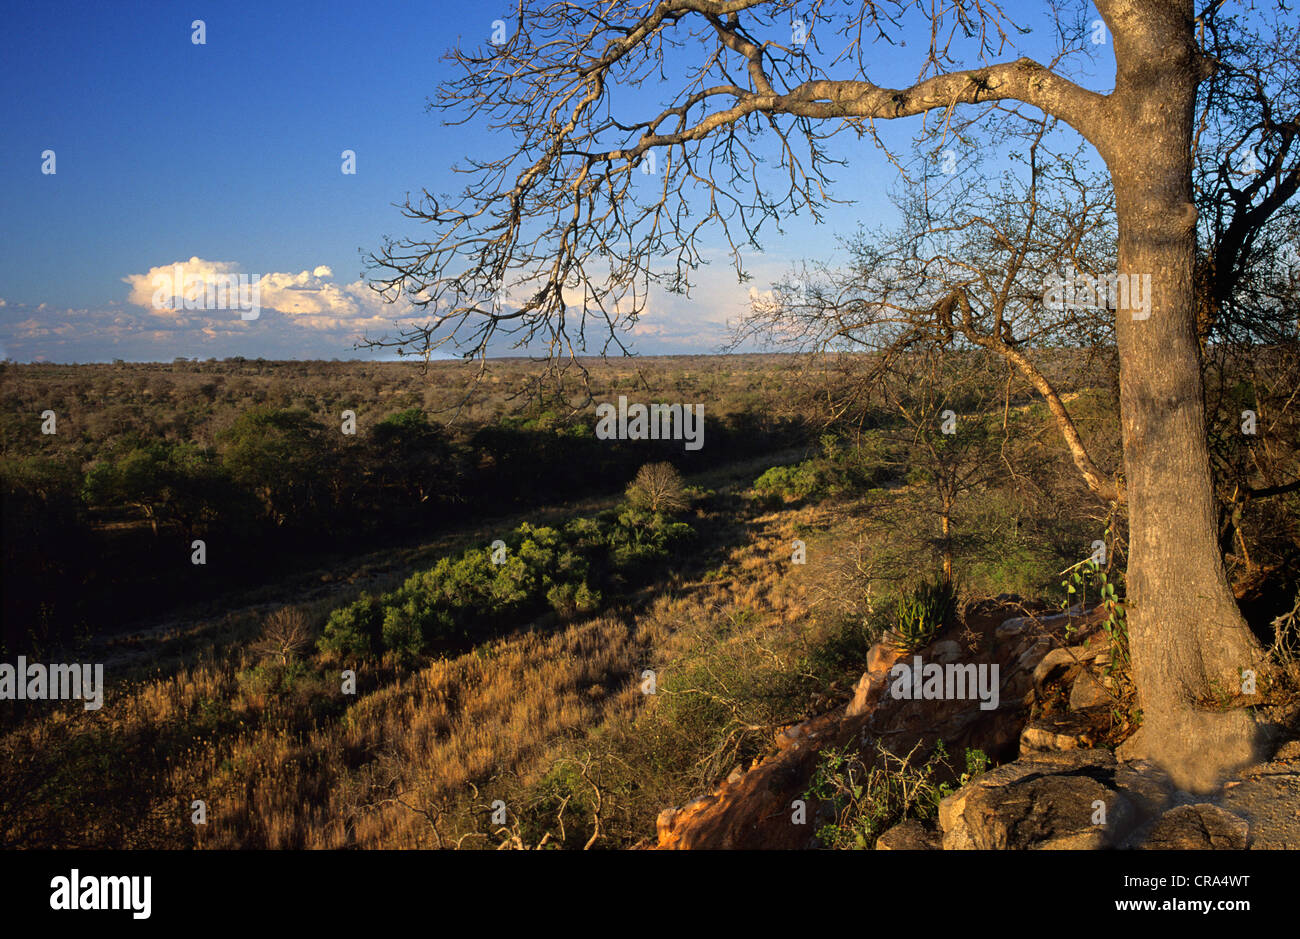 Sabana arbolada en zona de timbavati, el parque nacional Kruger, Sudáfrica Foto de stock